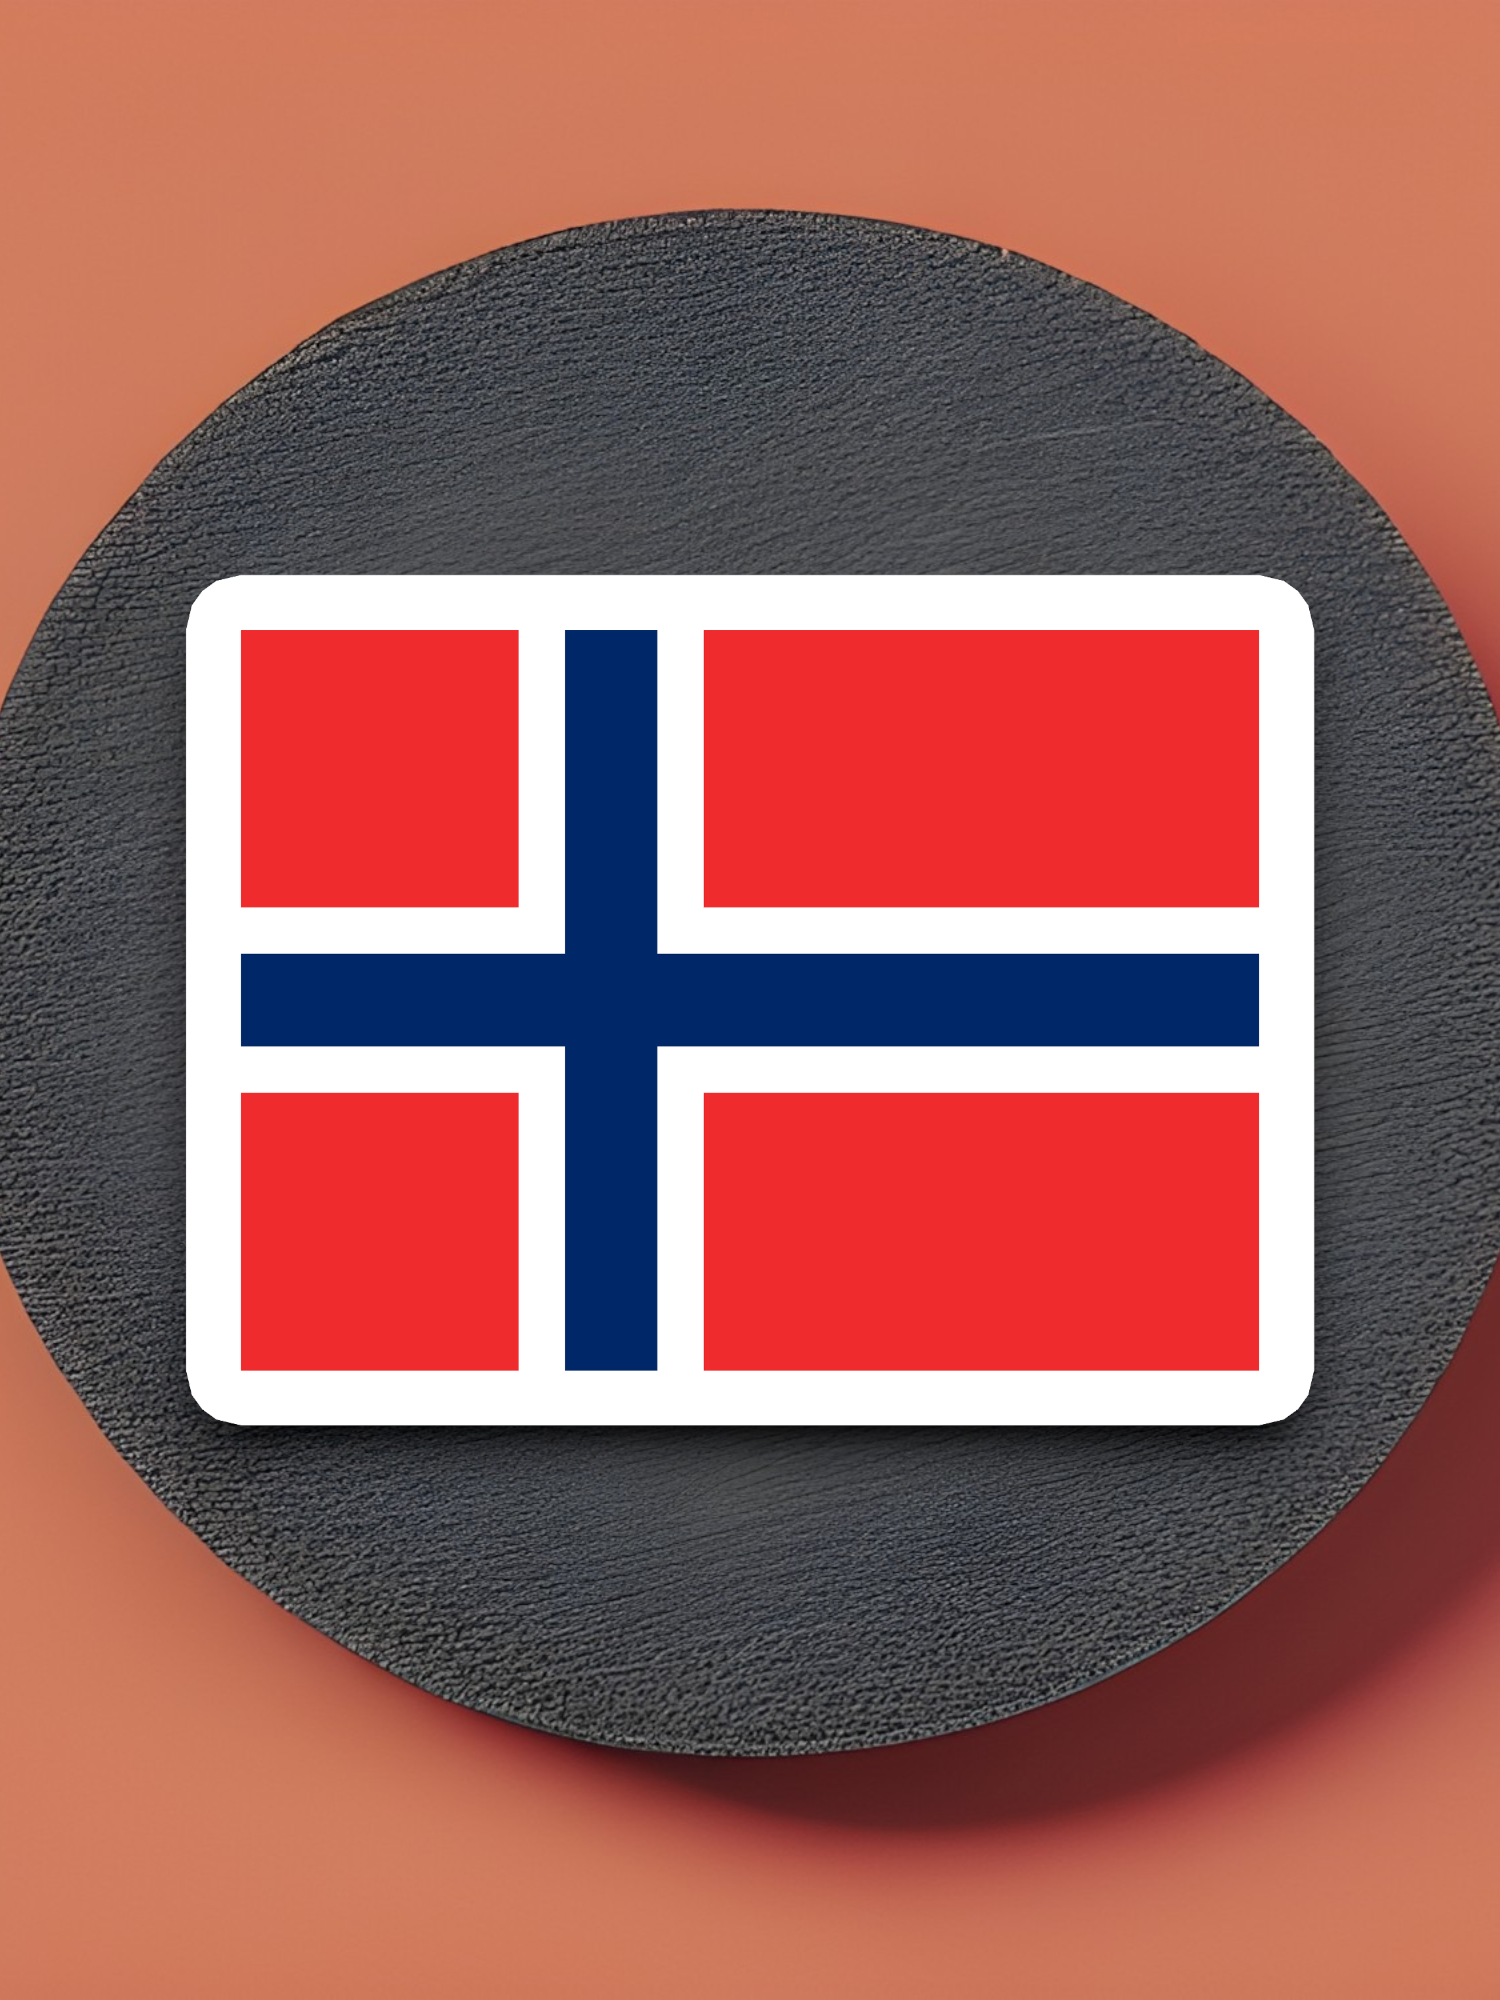 Svalbard and Jan Mayen Flag - International Country Flag Sticker